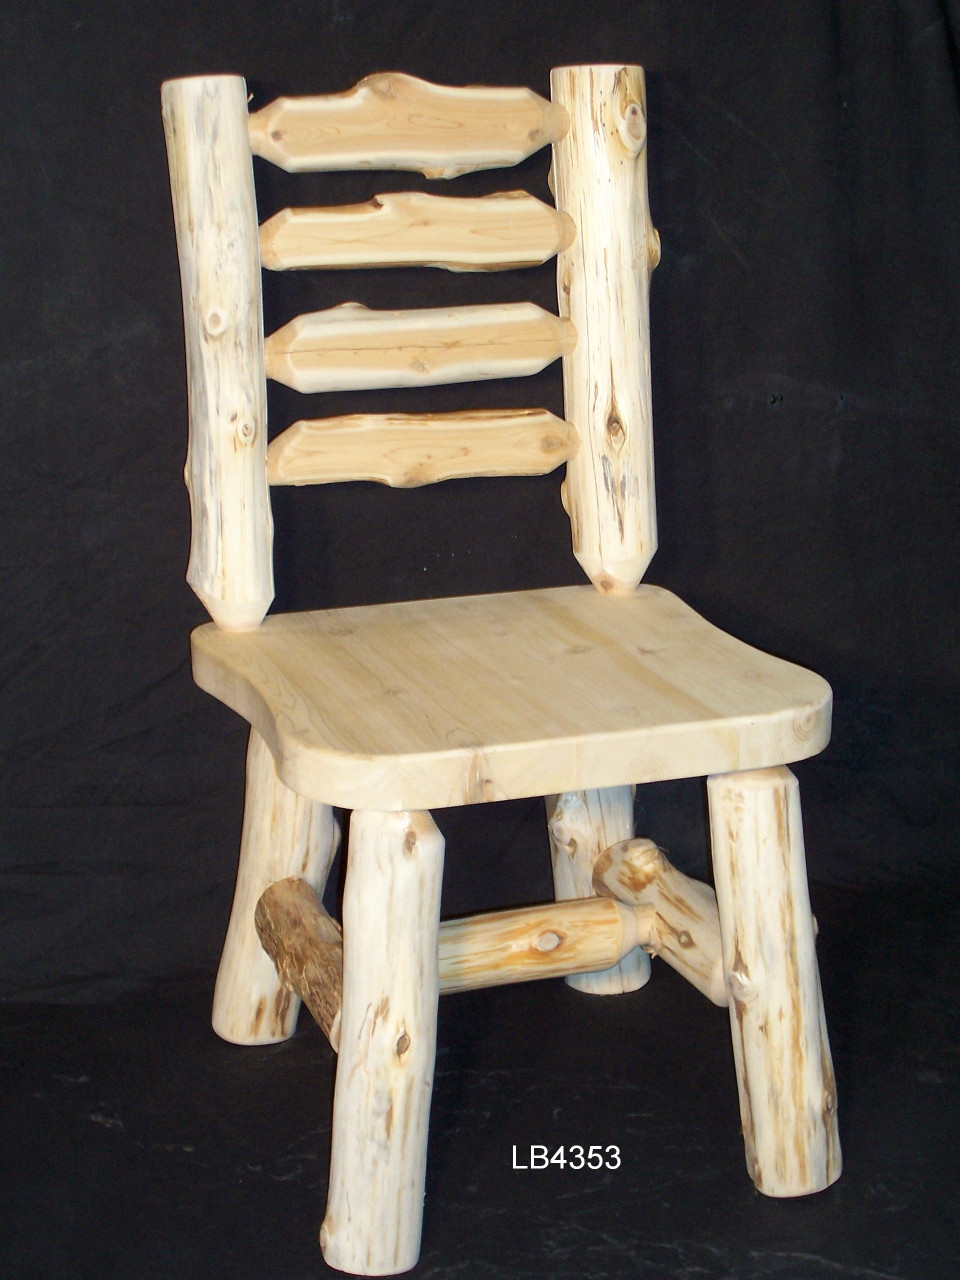 Hand Peeled Cedar Log Ladder Back Chairs Lb4353 Lb4353arm